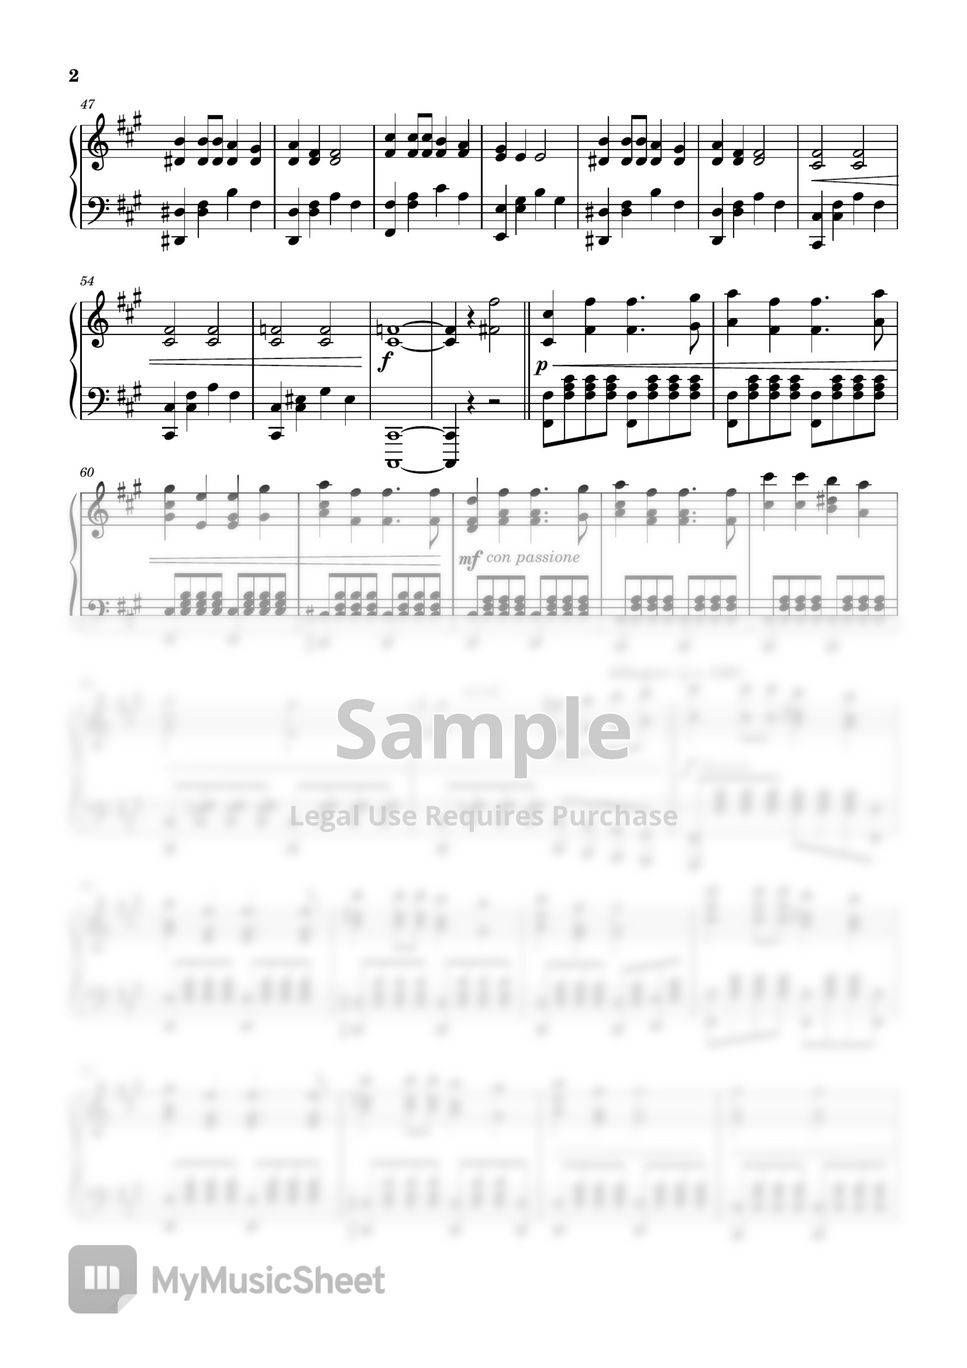 Hatsune Miku/Traditional Music - Ievan Polkka (Sad & Emotional Version) by PianoDeuss